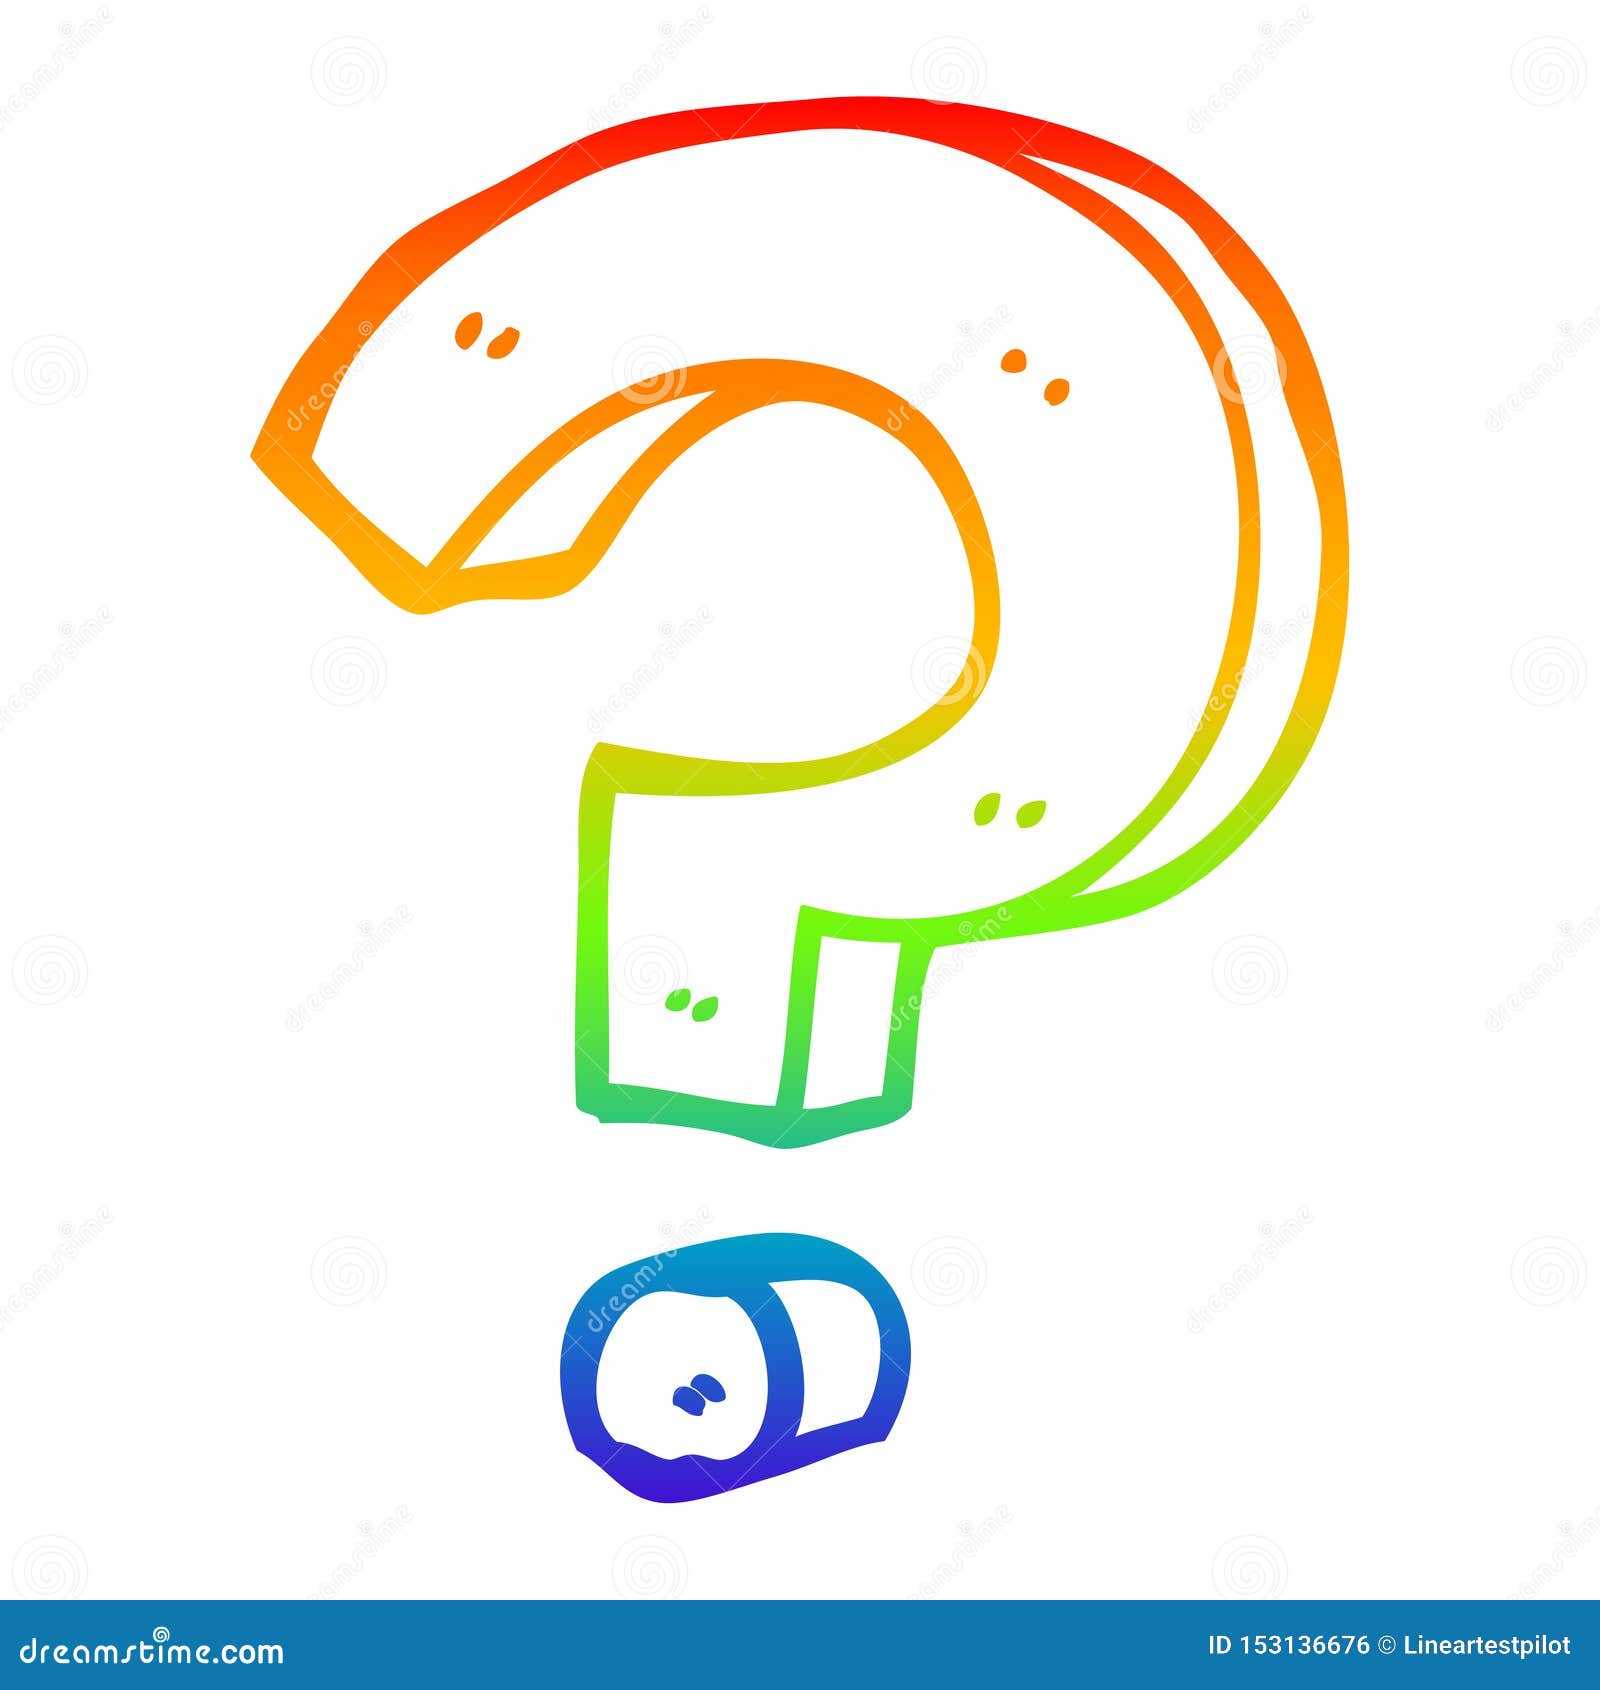 A Creative Rainbow Gradient Line Drawing Cartoon Question Mark Stock